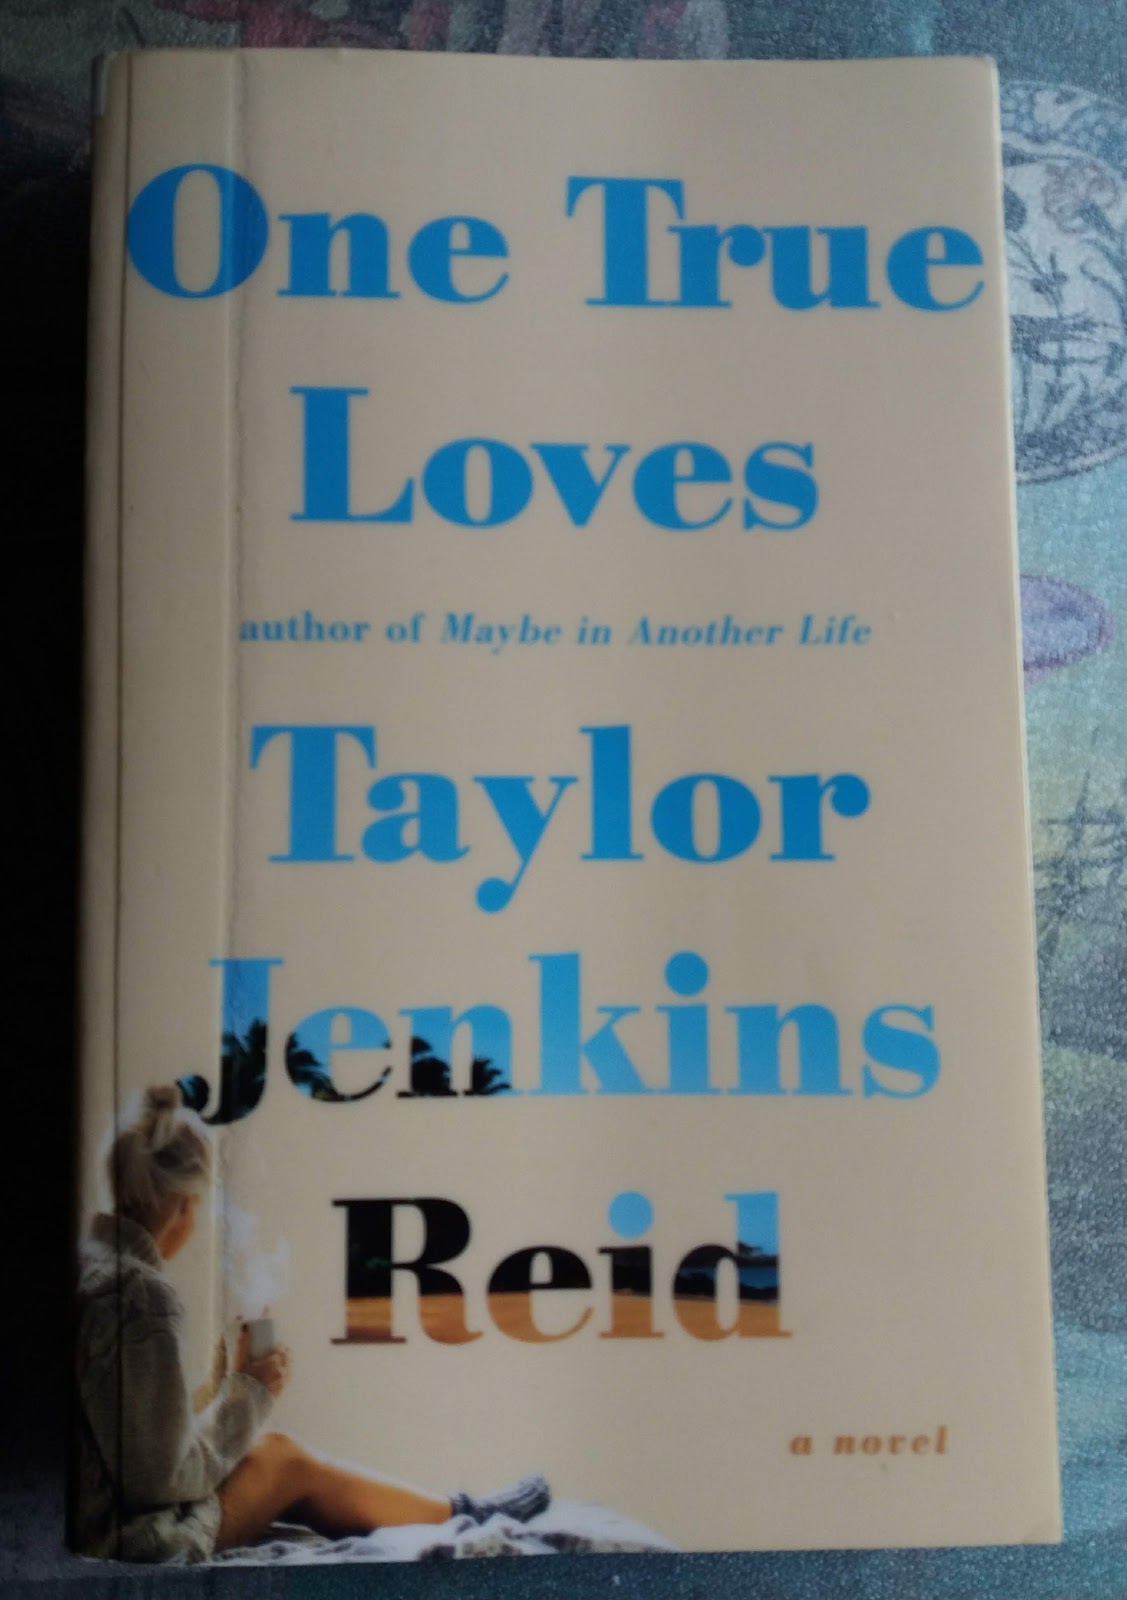 download taylor jenkins reid one true loves ending